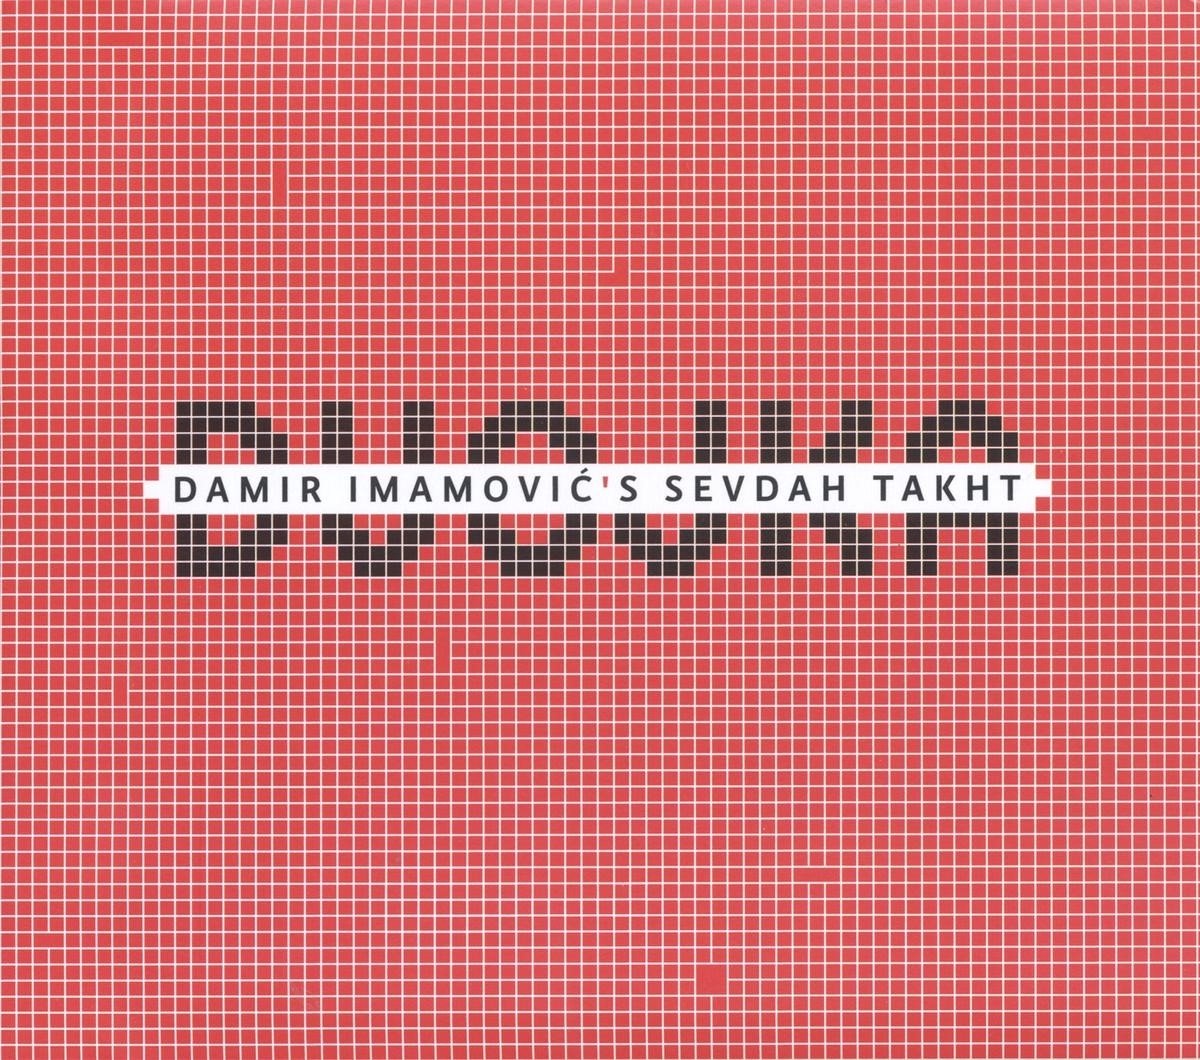 Damir Imamovic's Sevdah Takht - Dvojka (LP) - Damir Imamovic'S Sevdah Takht